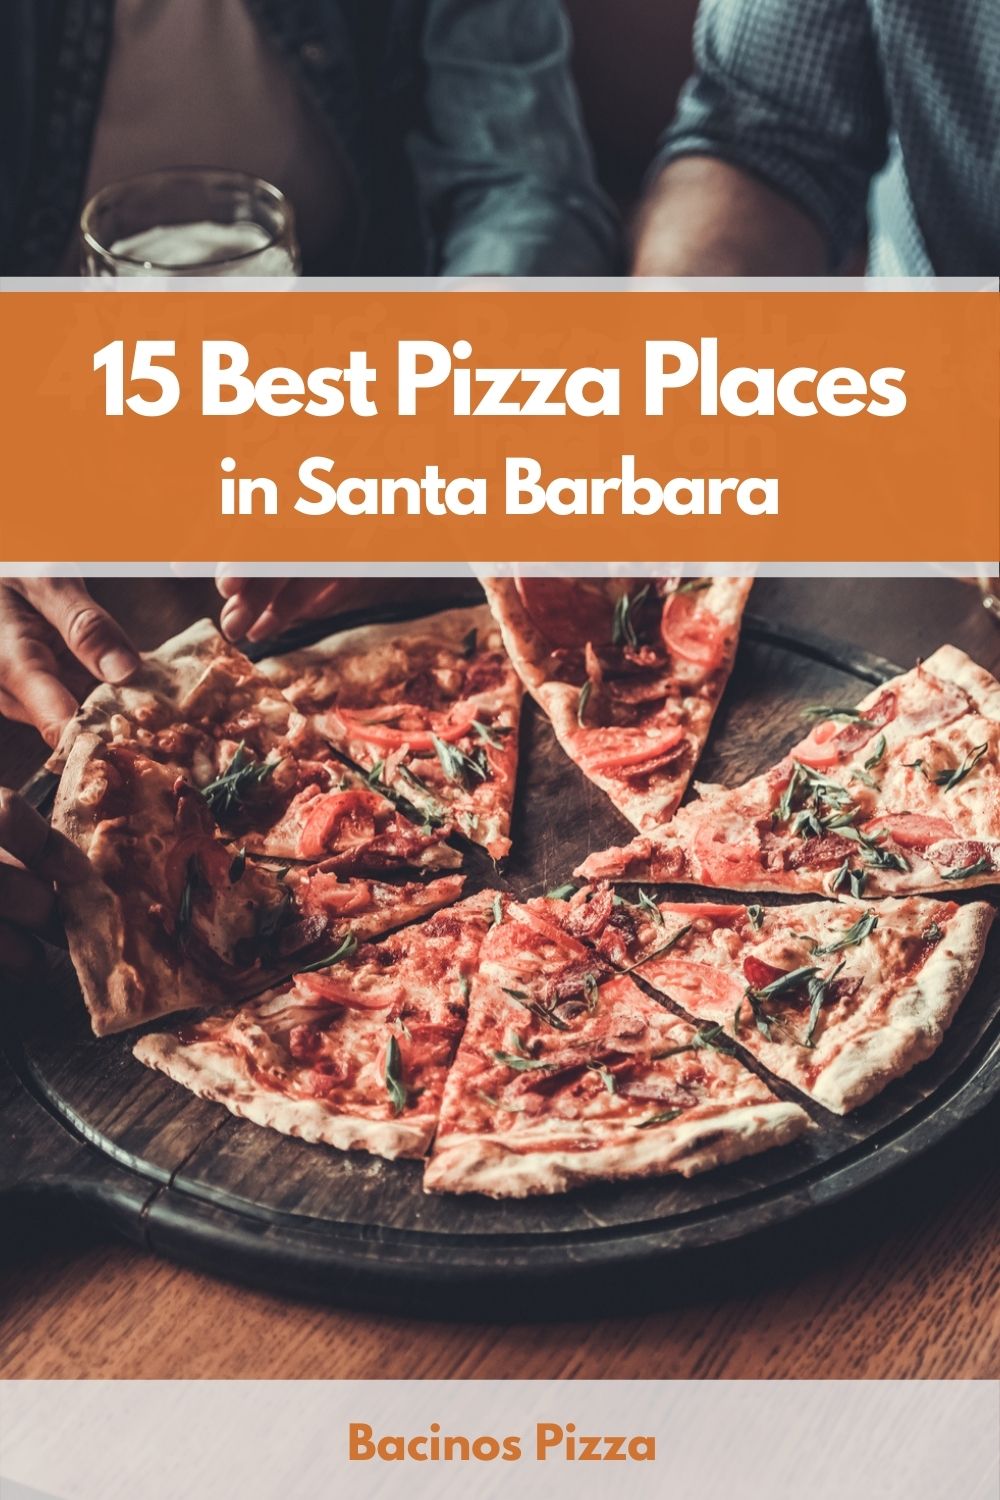 15 Best Pizza Places in Santa Barbara pin